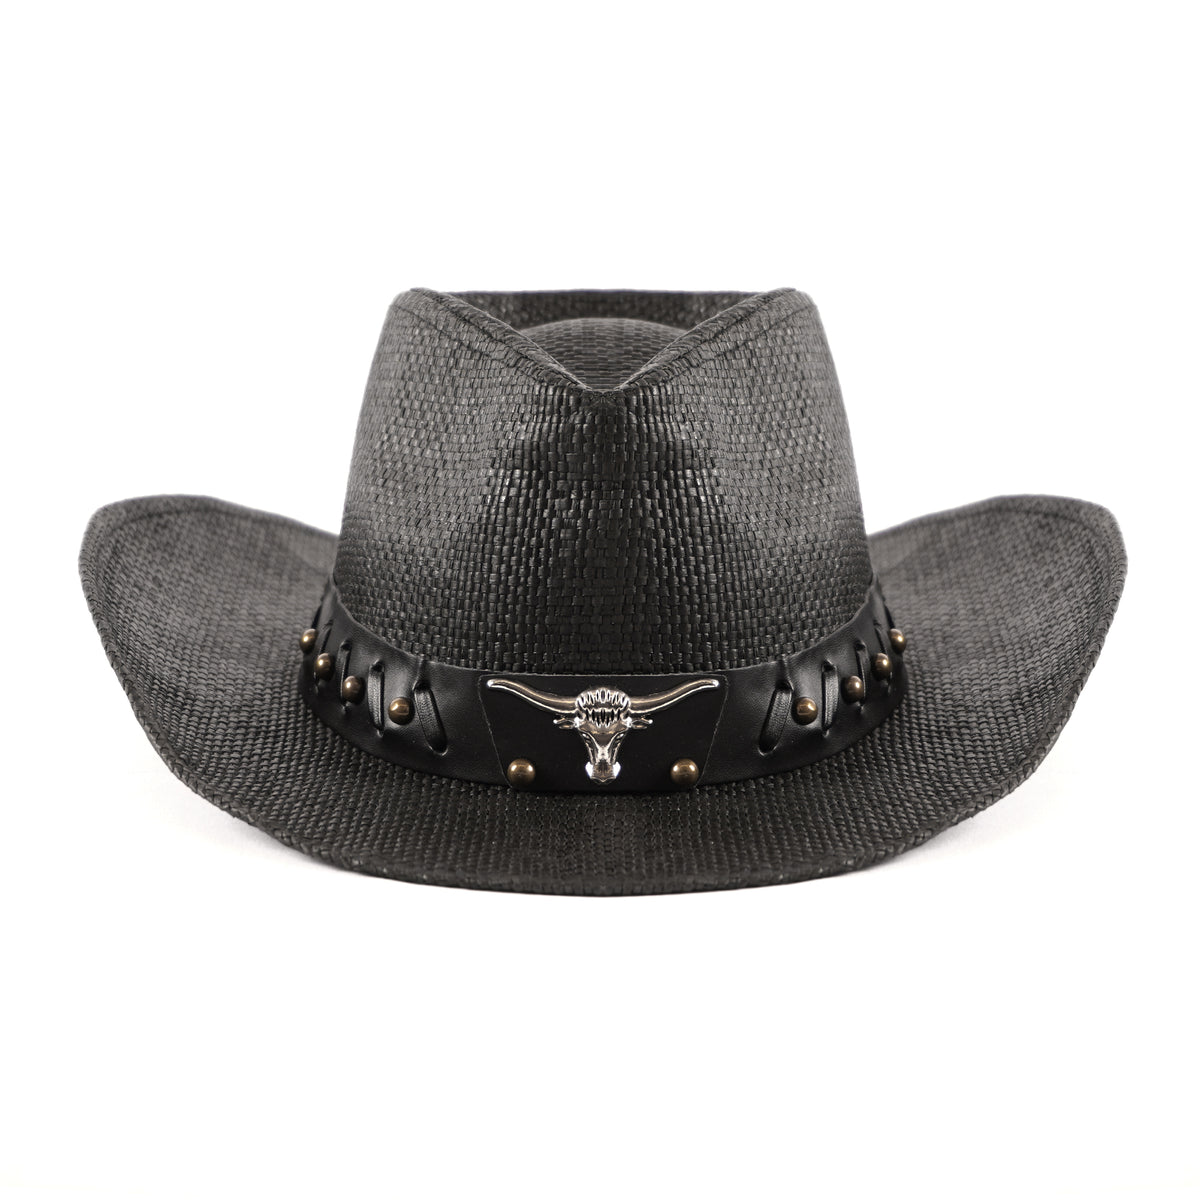 Black Longhorn Men & Women's Cowboy Cowgirl Hat - Western Hats for Women, Adjustable Cowboy Hat Men with Wide Brim